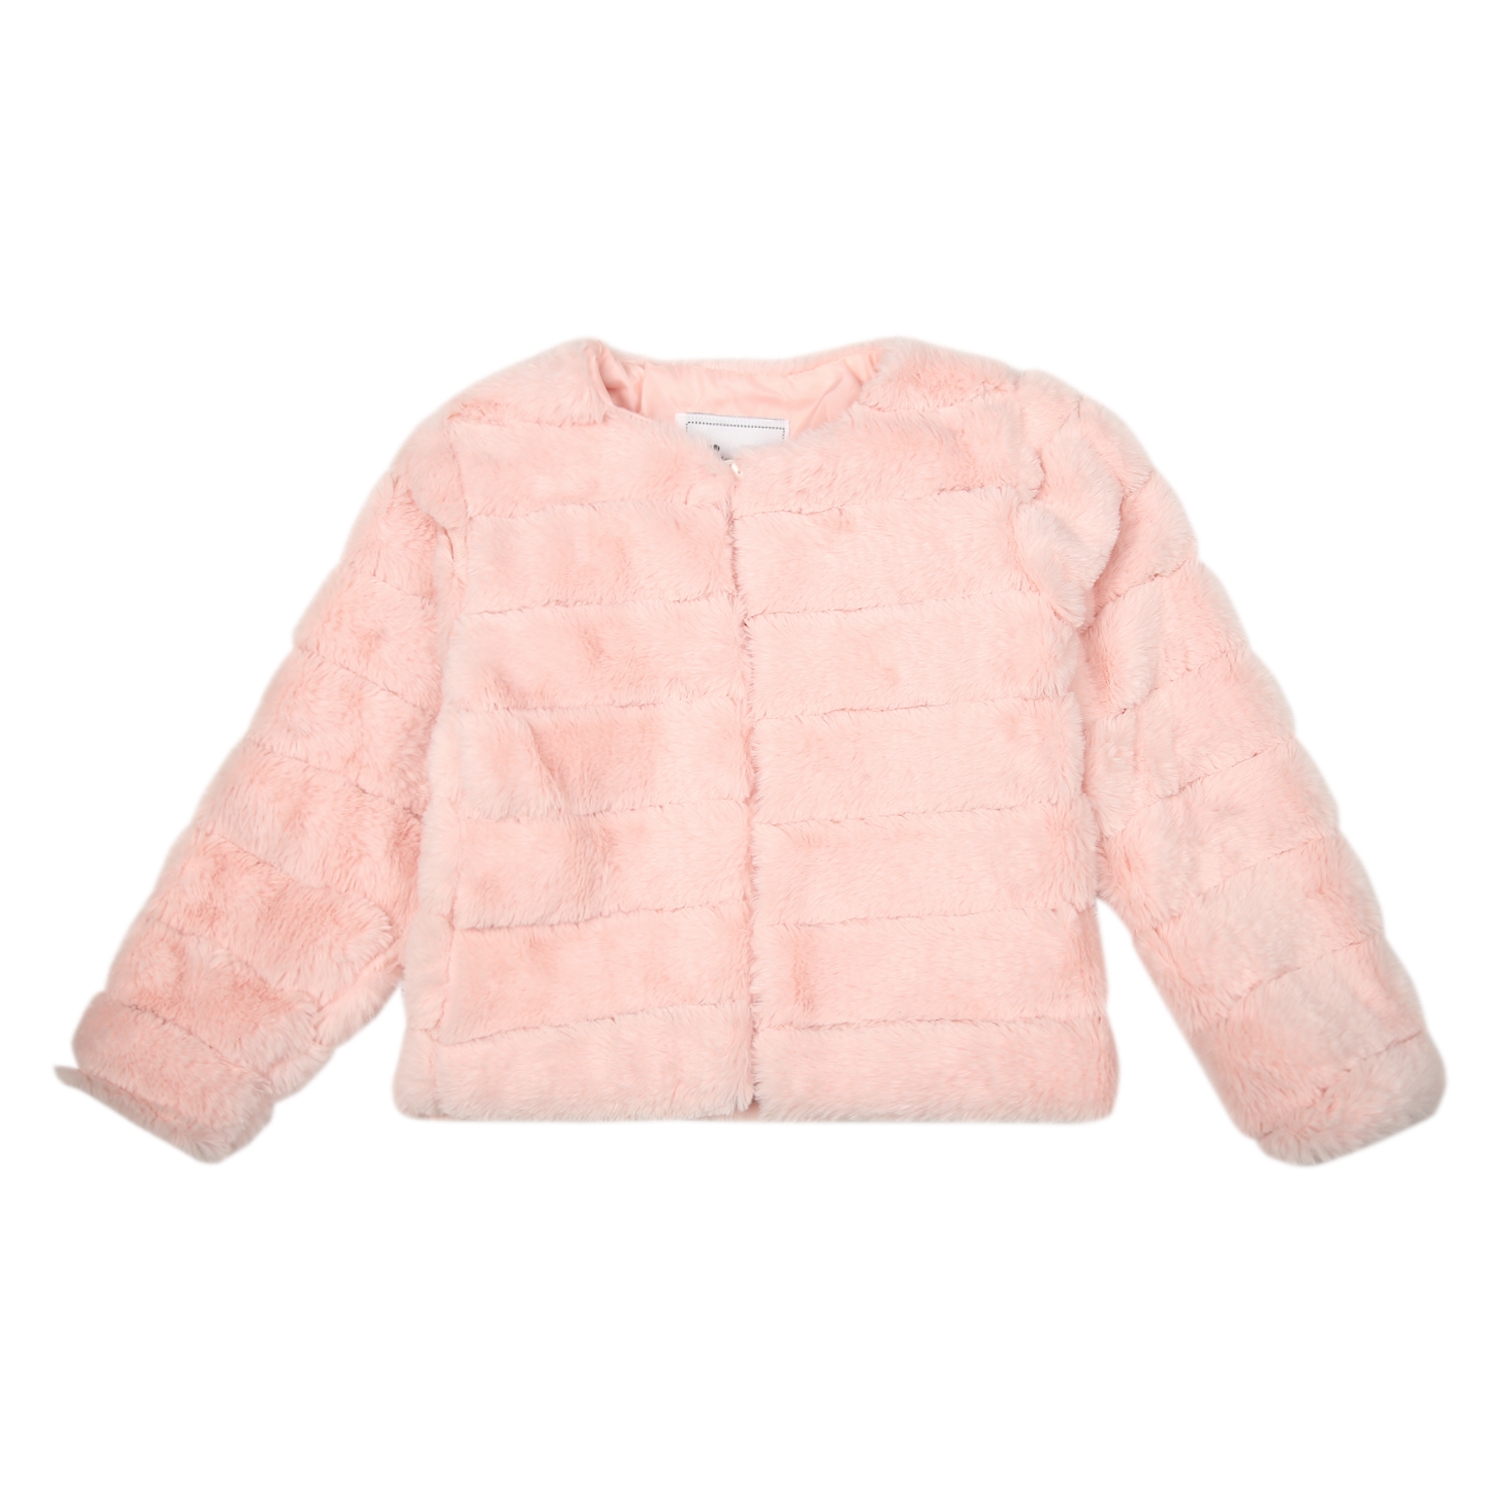 Mothercare | Girls Full Sleeves Jacket - Pink 0